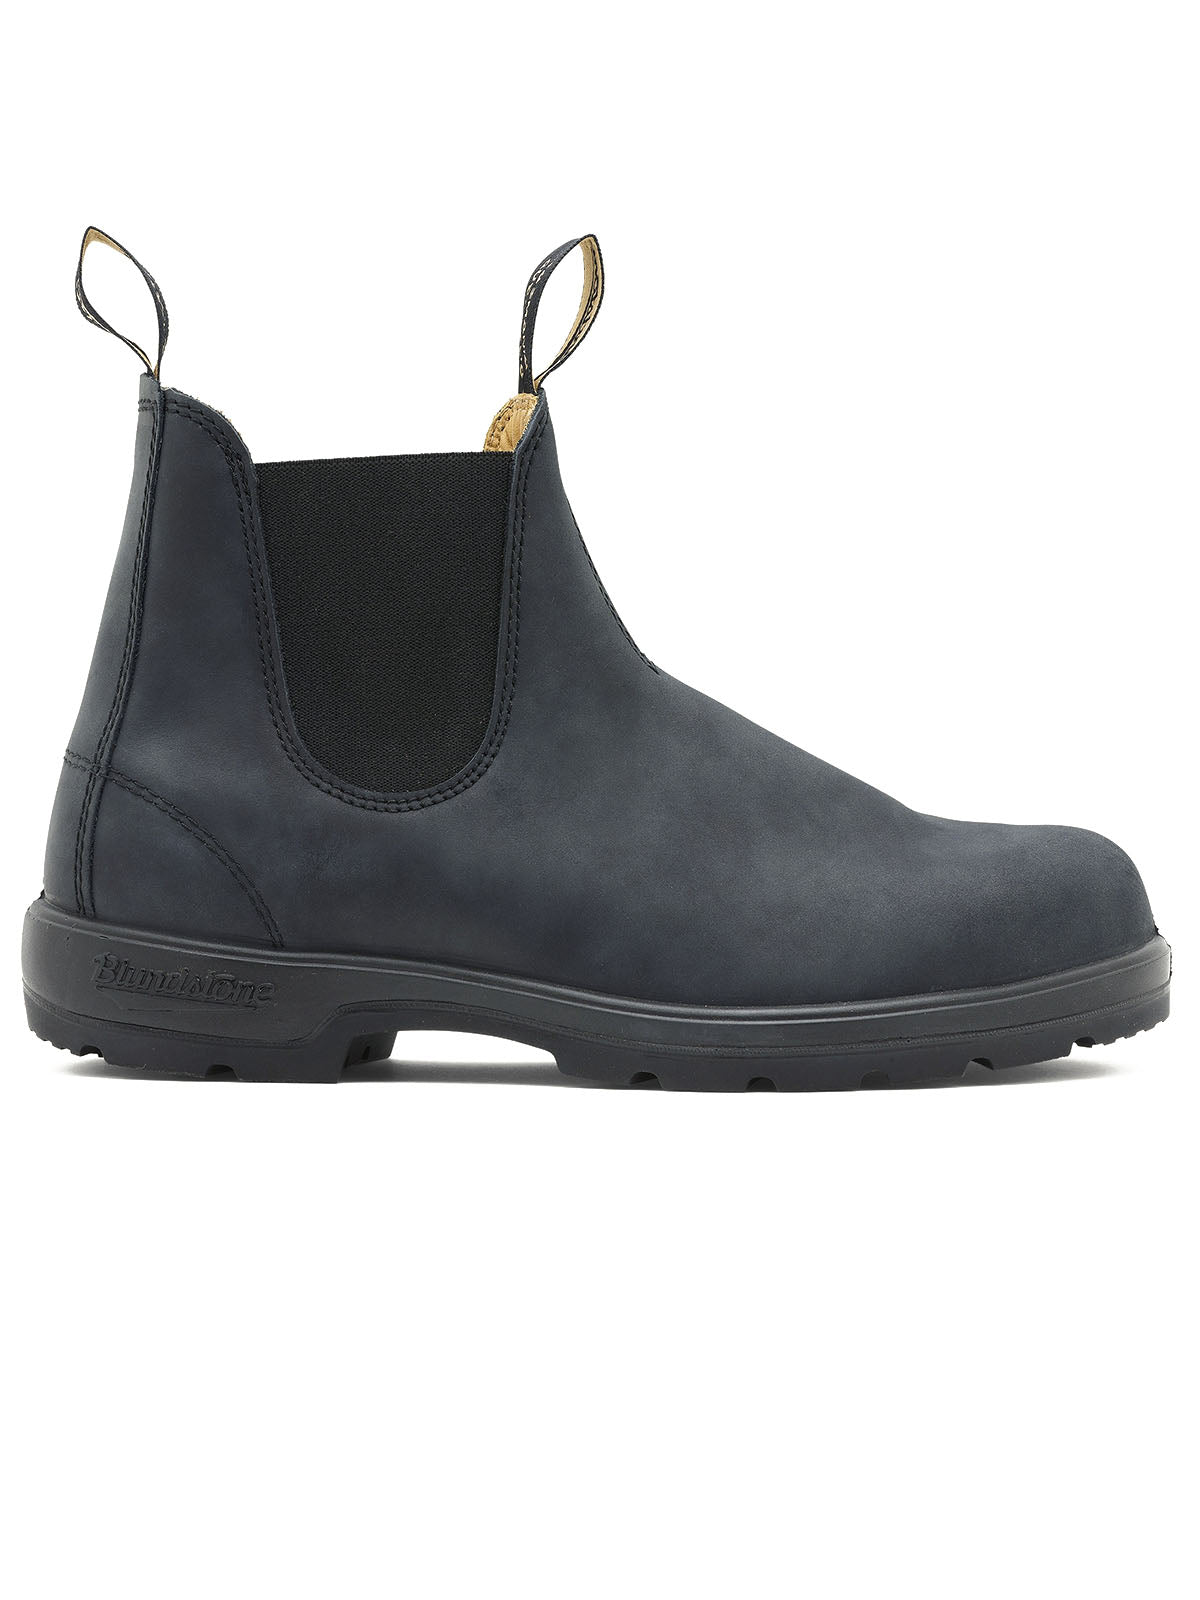 Stivali Uomo Blundstone - 587 Premium Leather Lined Elastic Sided Boot - Nero